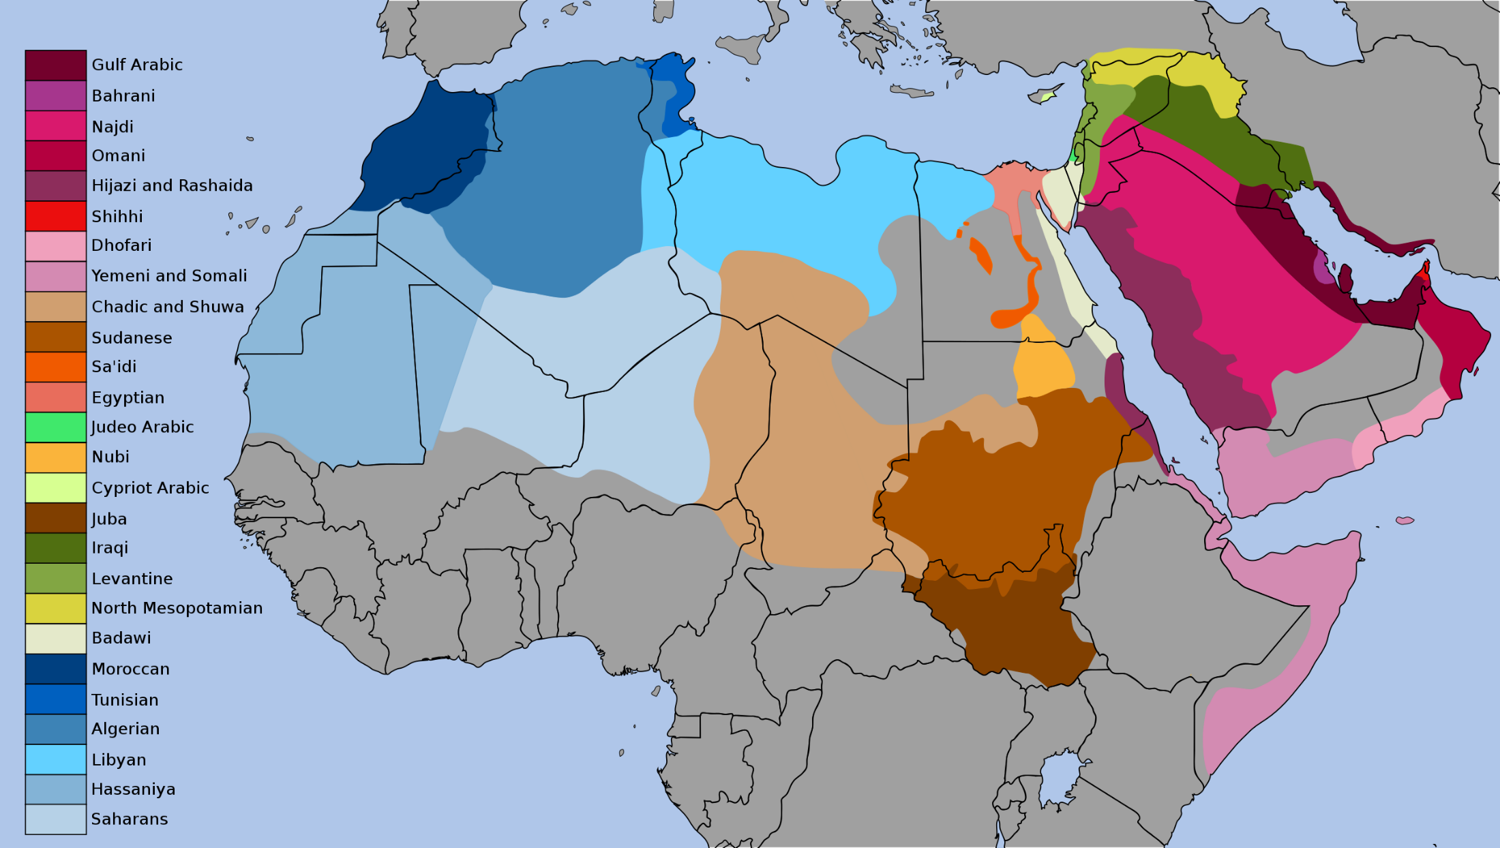 Colloquial Arabic regions